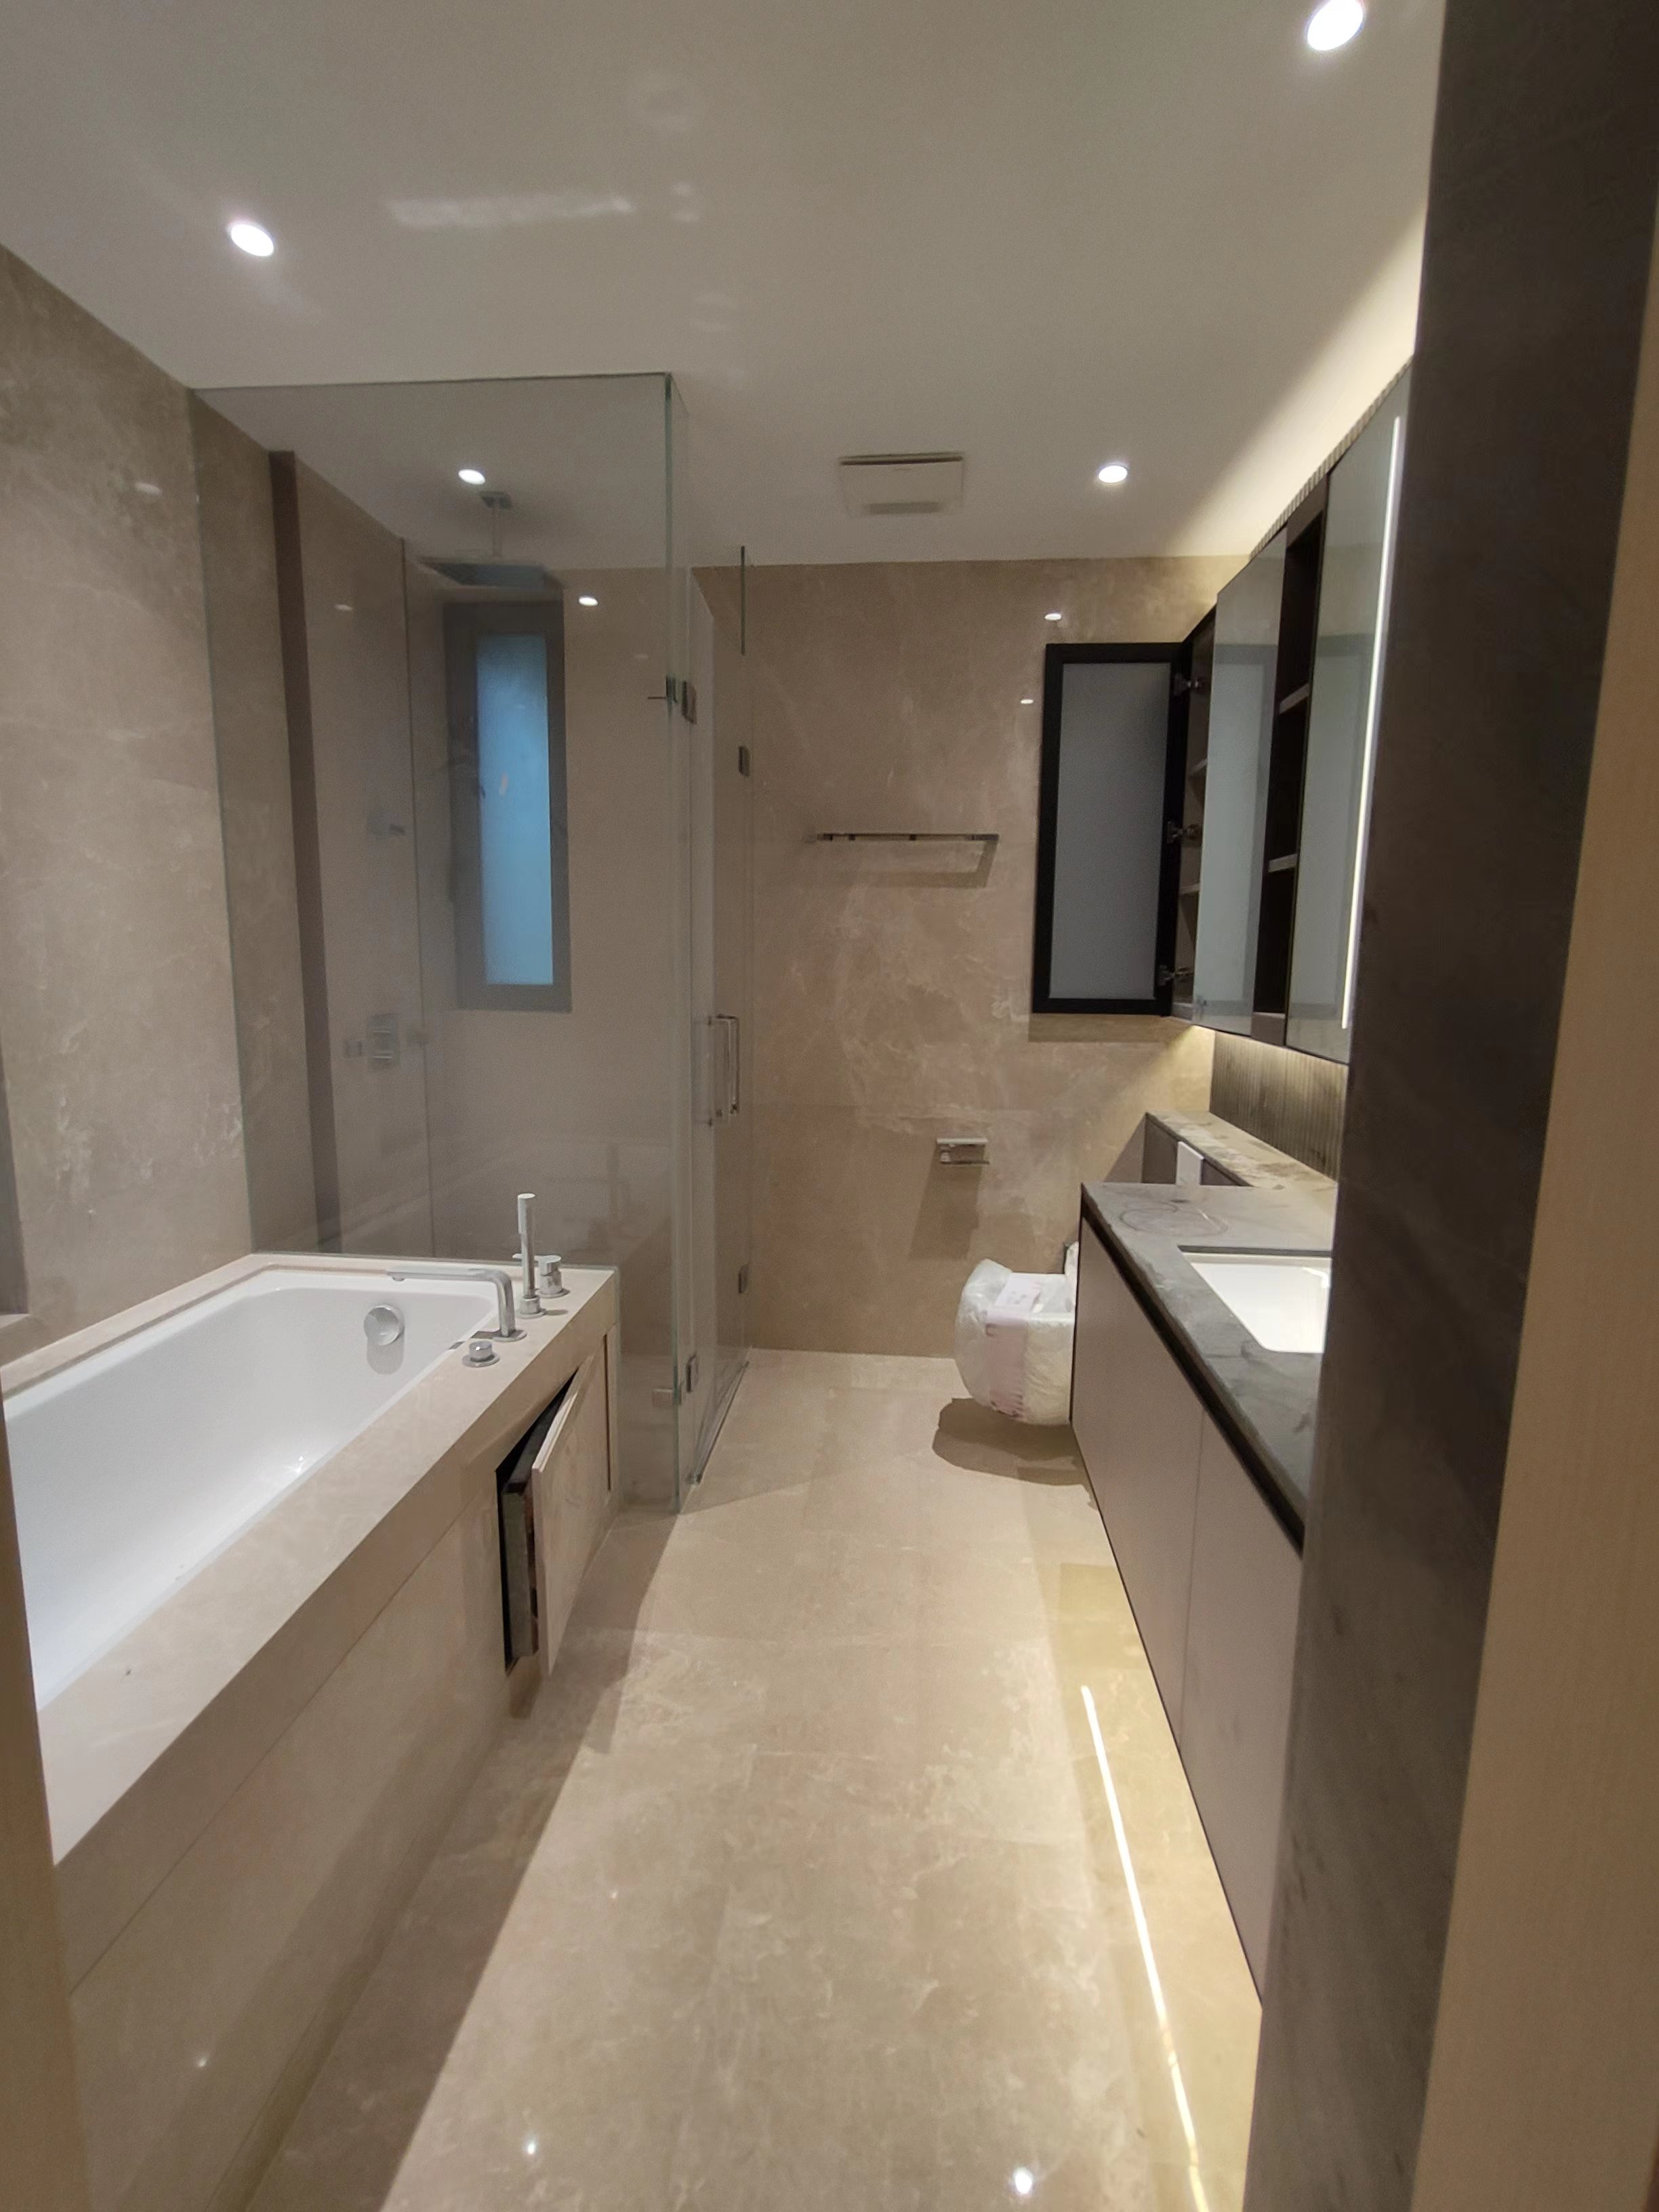 bathtub Brand-new High-end 3BR Riverside Apartment for Rent near Shanghai’s Lujiazui